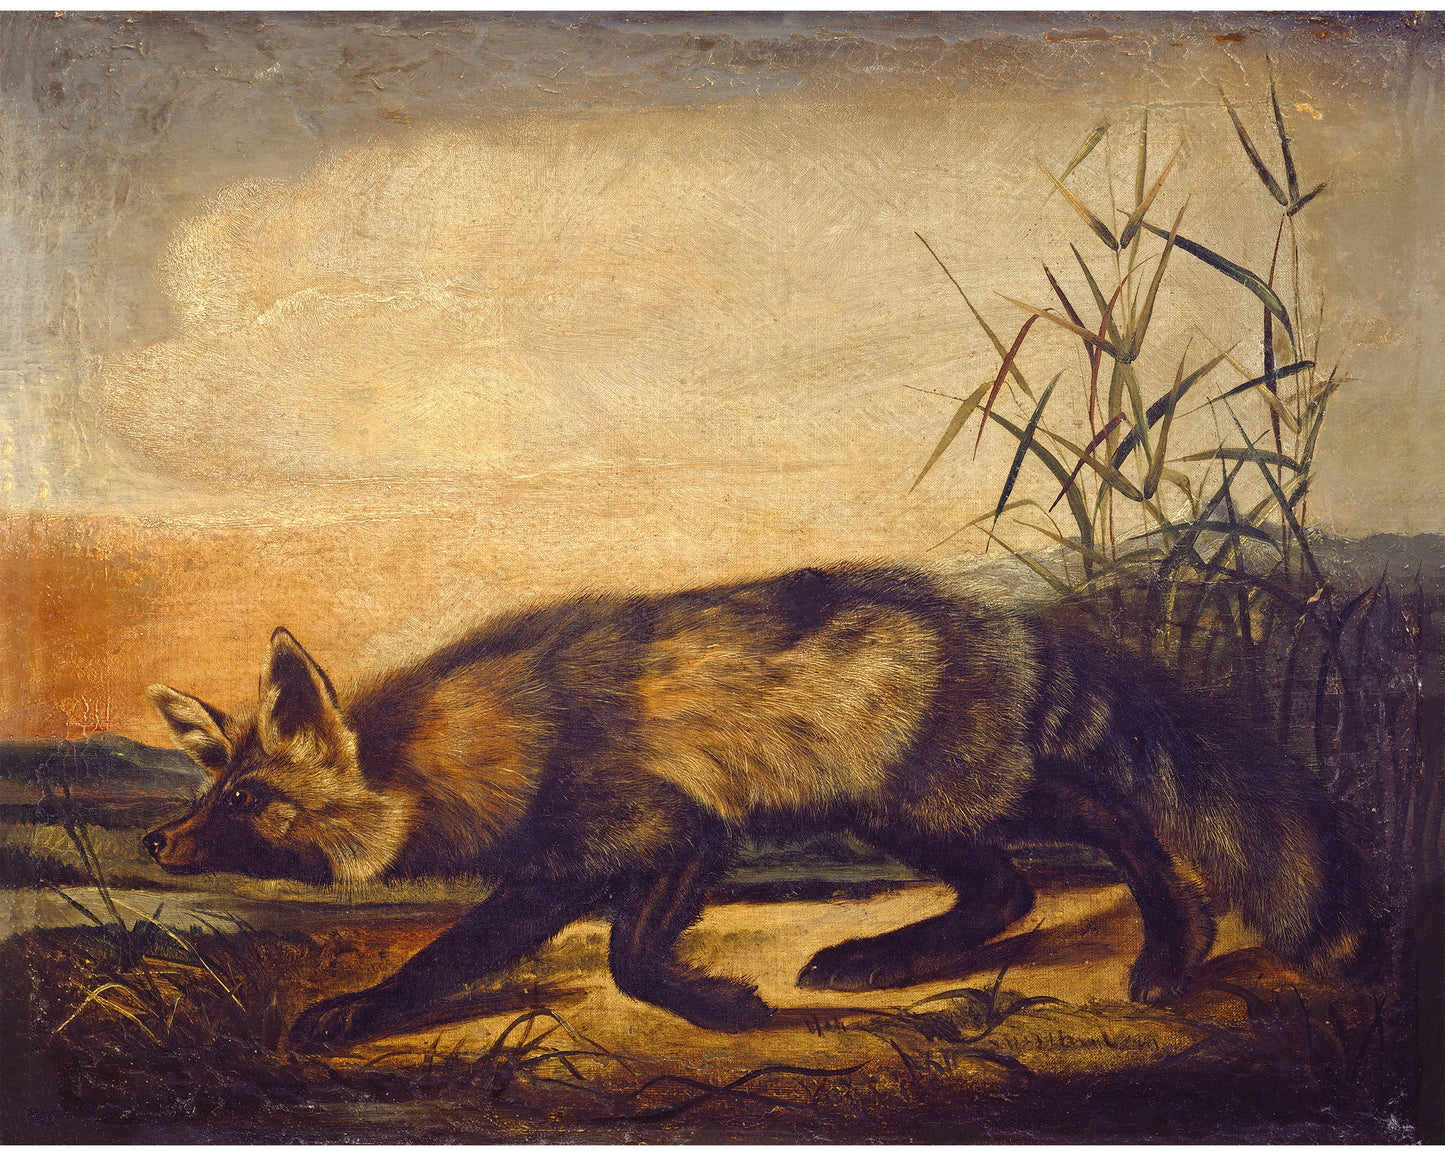 Vintage fox print | John Woodhouse Audubon | Red fox painting | Antique animal art | Woodland wall art | Moody natural history